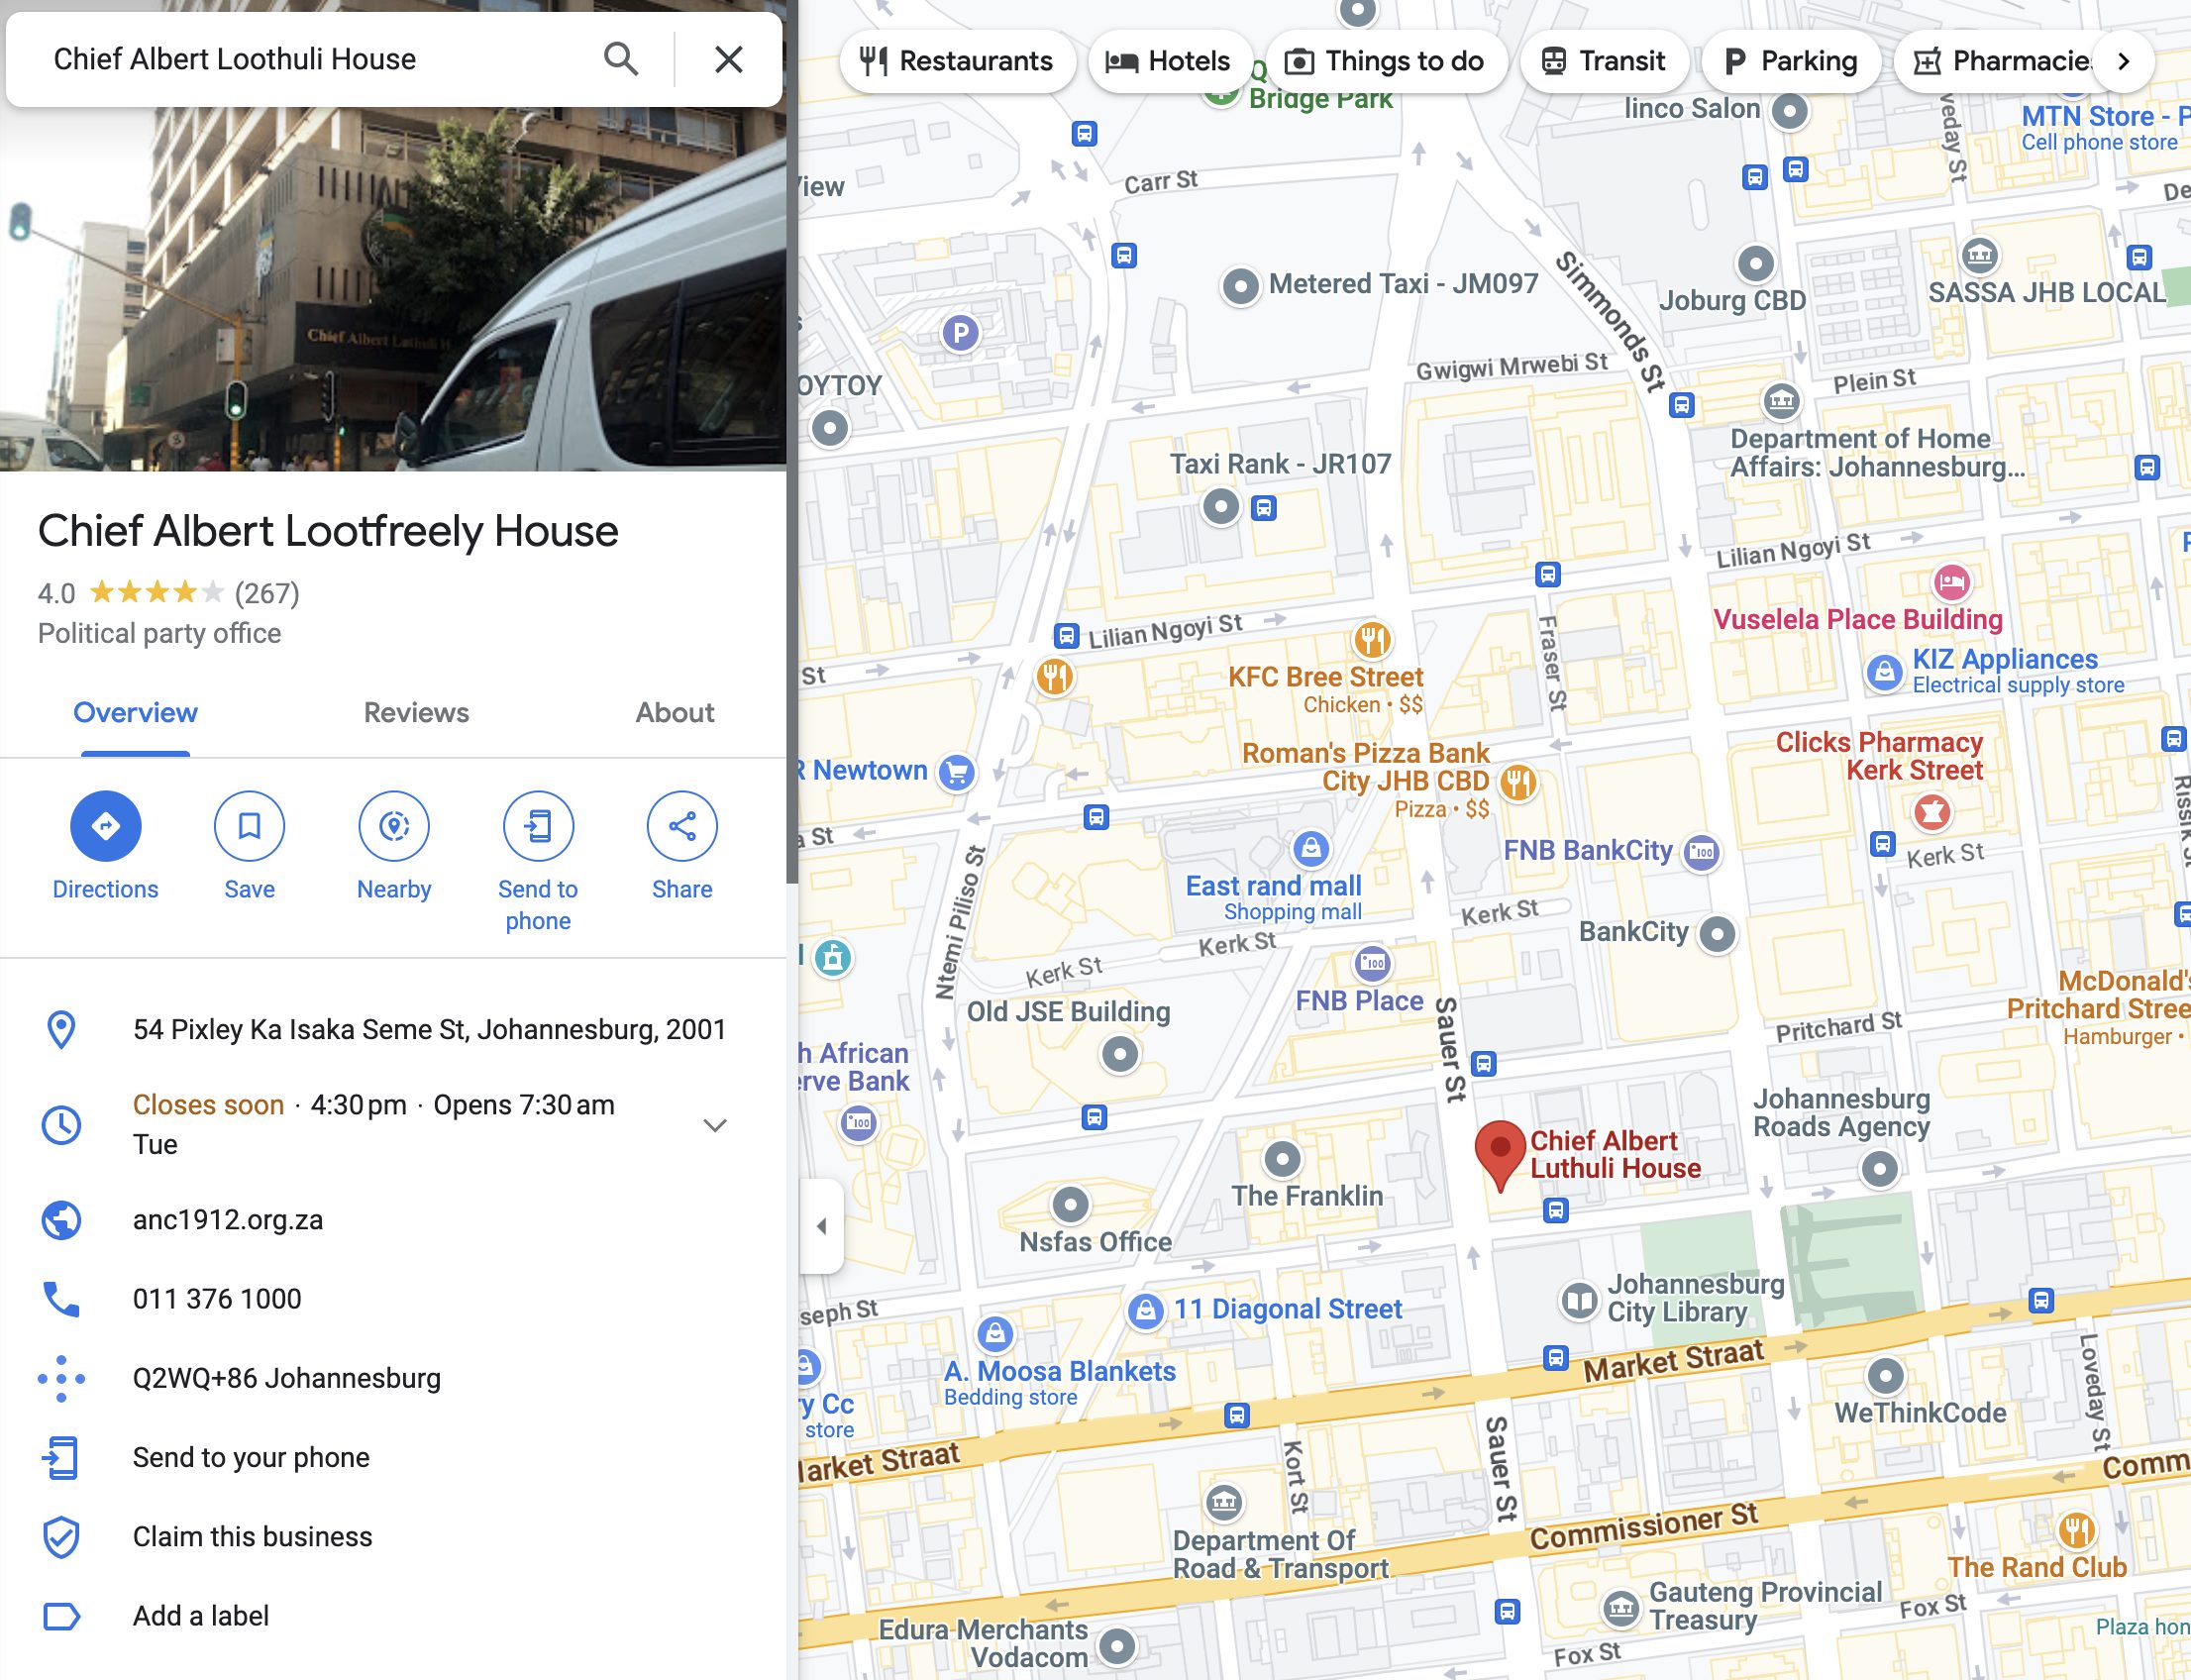 Eskom Megawatt Park And Luthuli House Renamed on Google Maps!